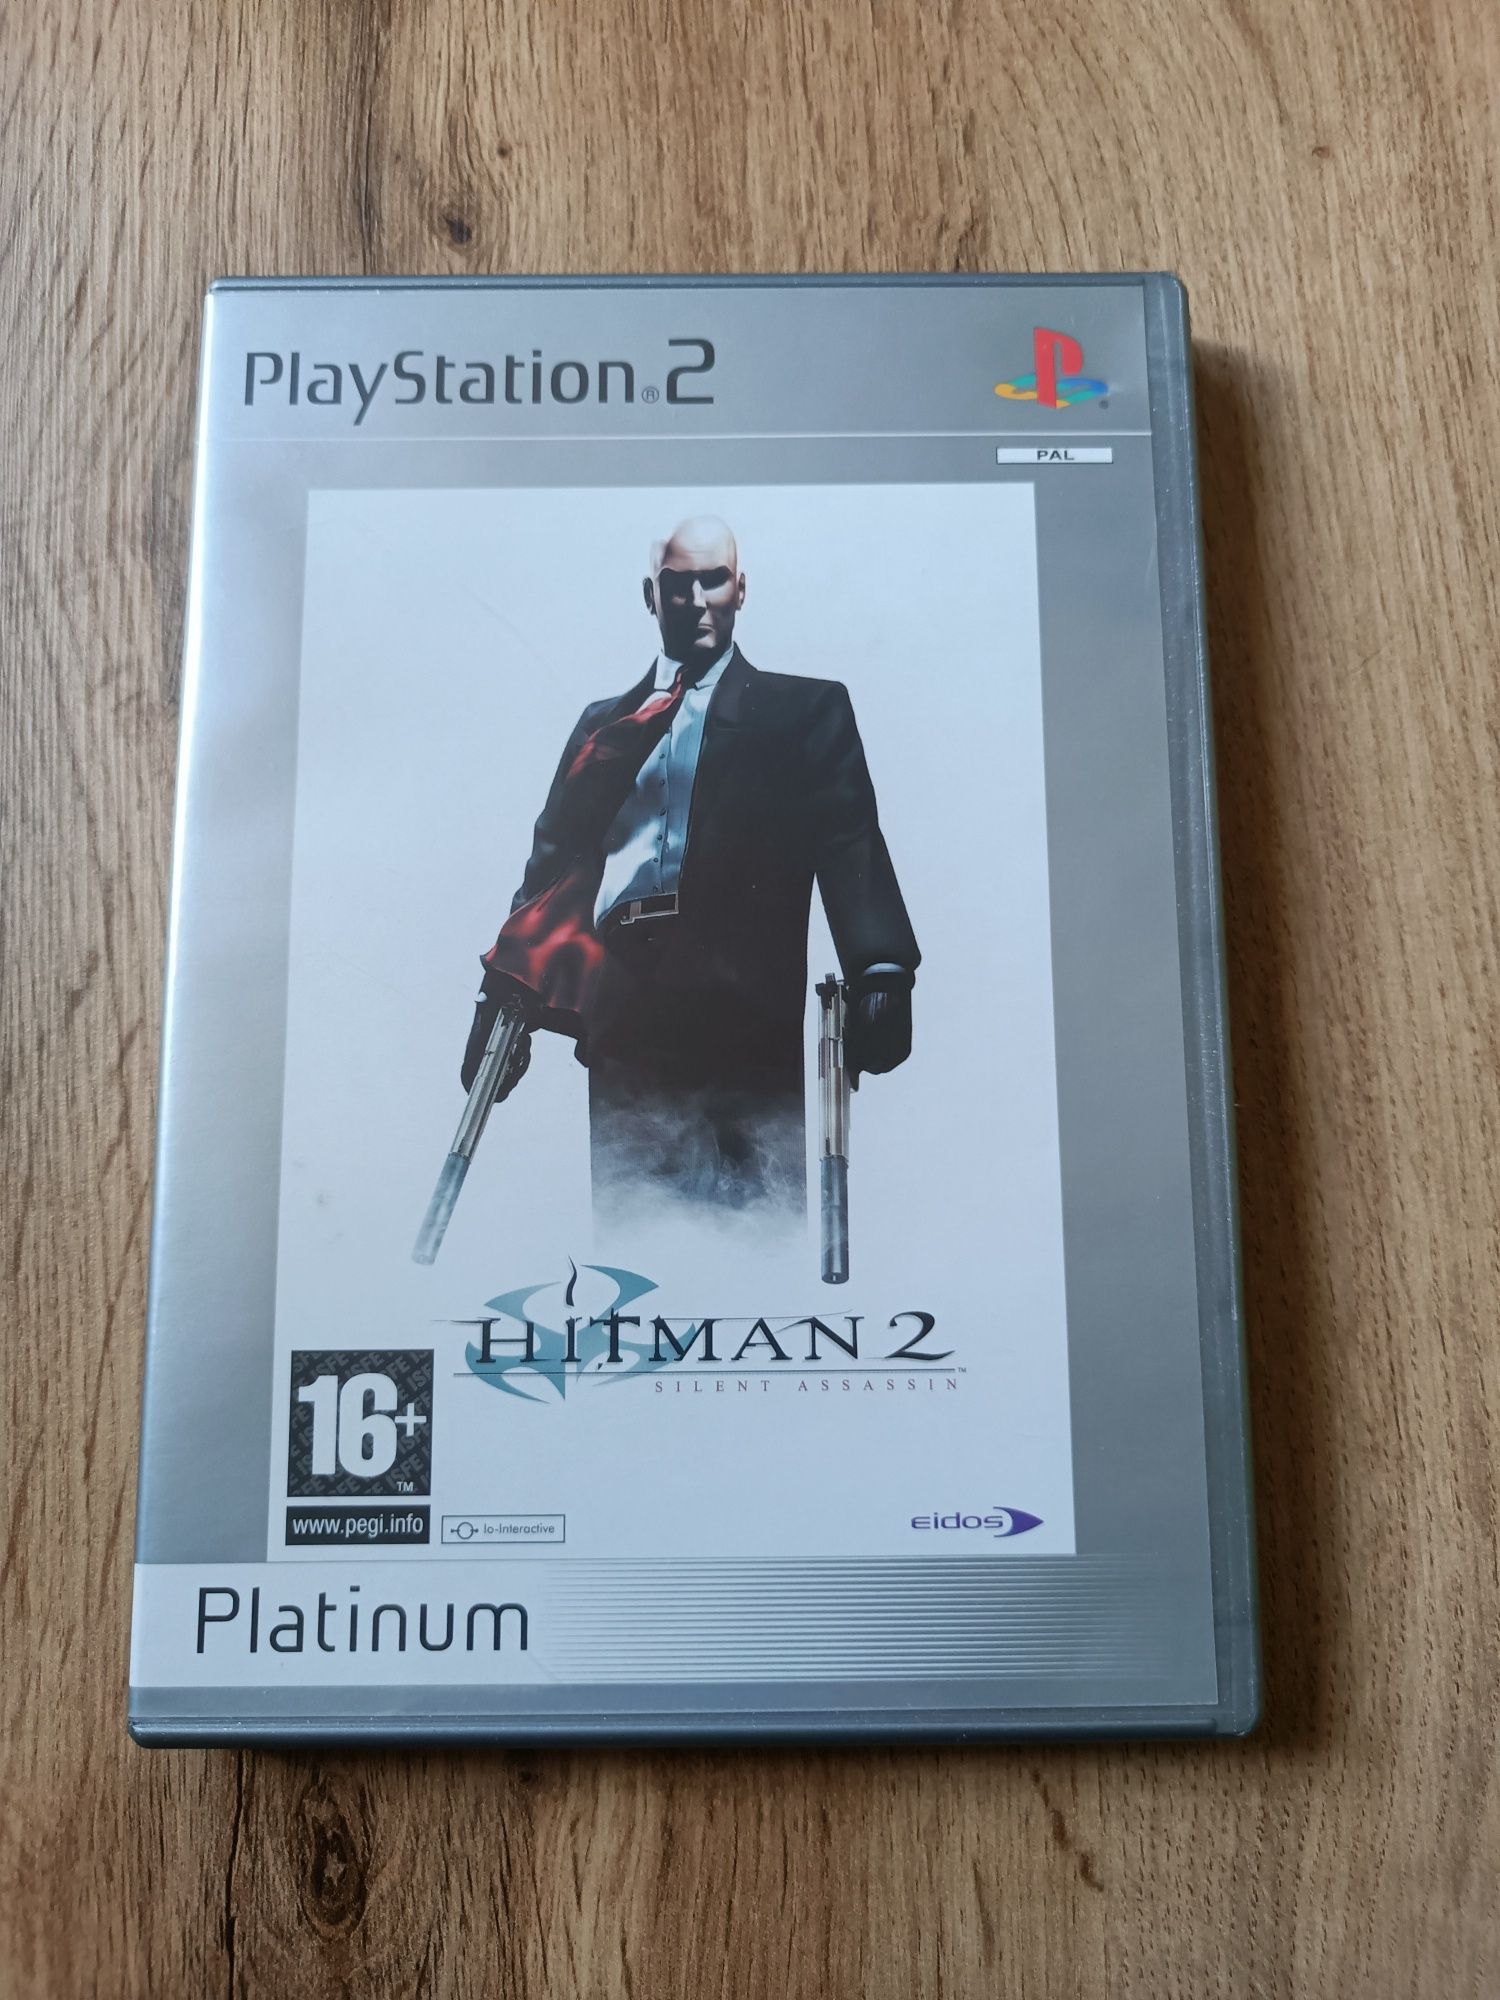 Hitman 2 Silent Assassin PS2